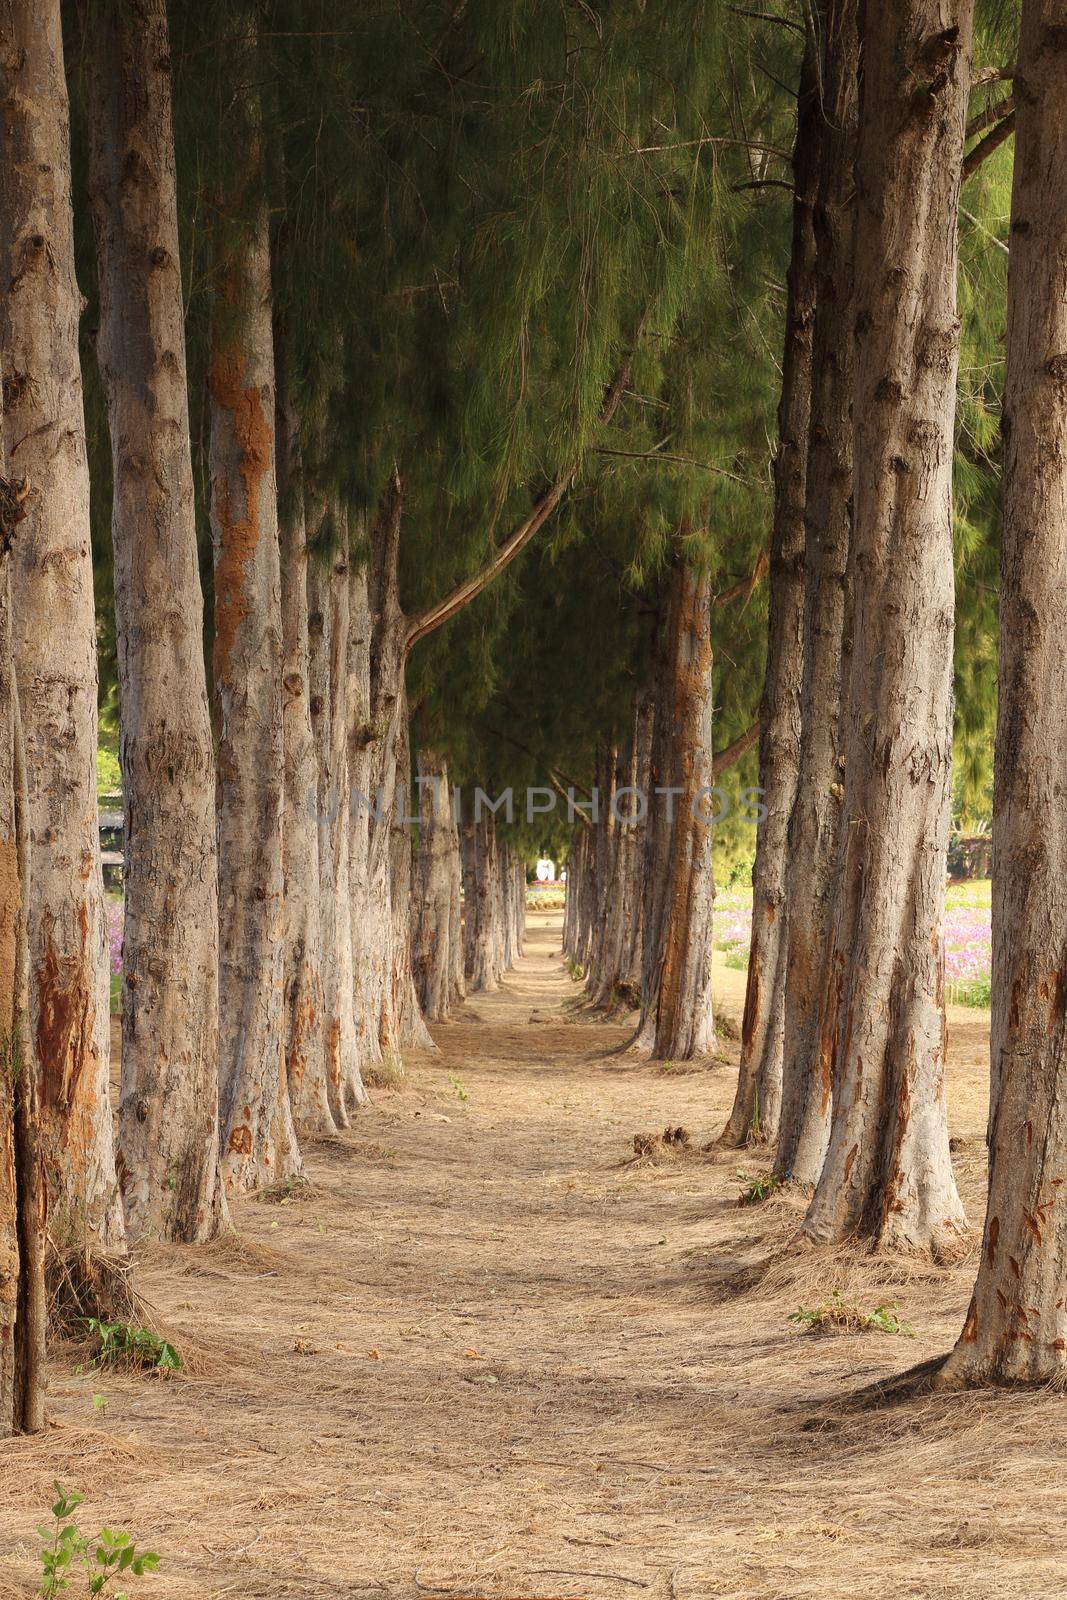 gravel path between pine trees by geargodz